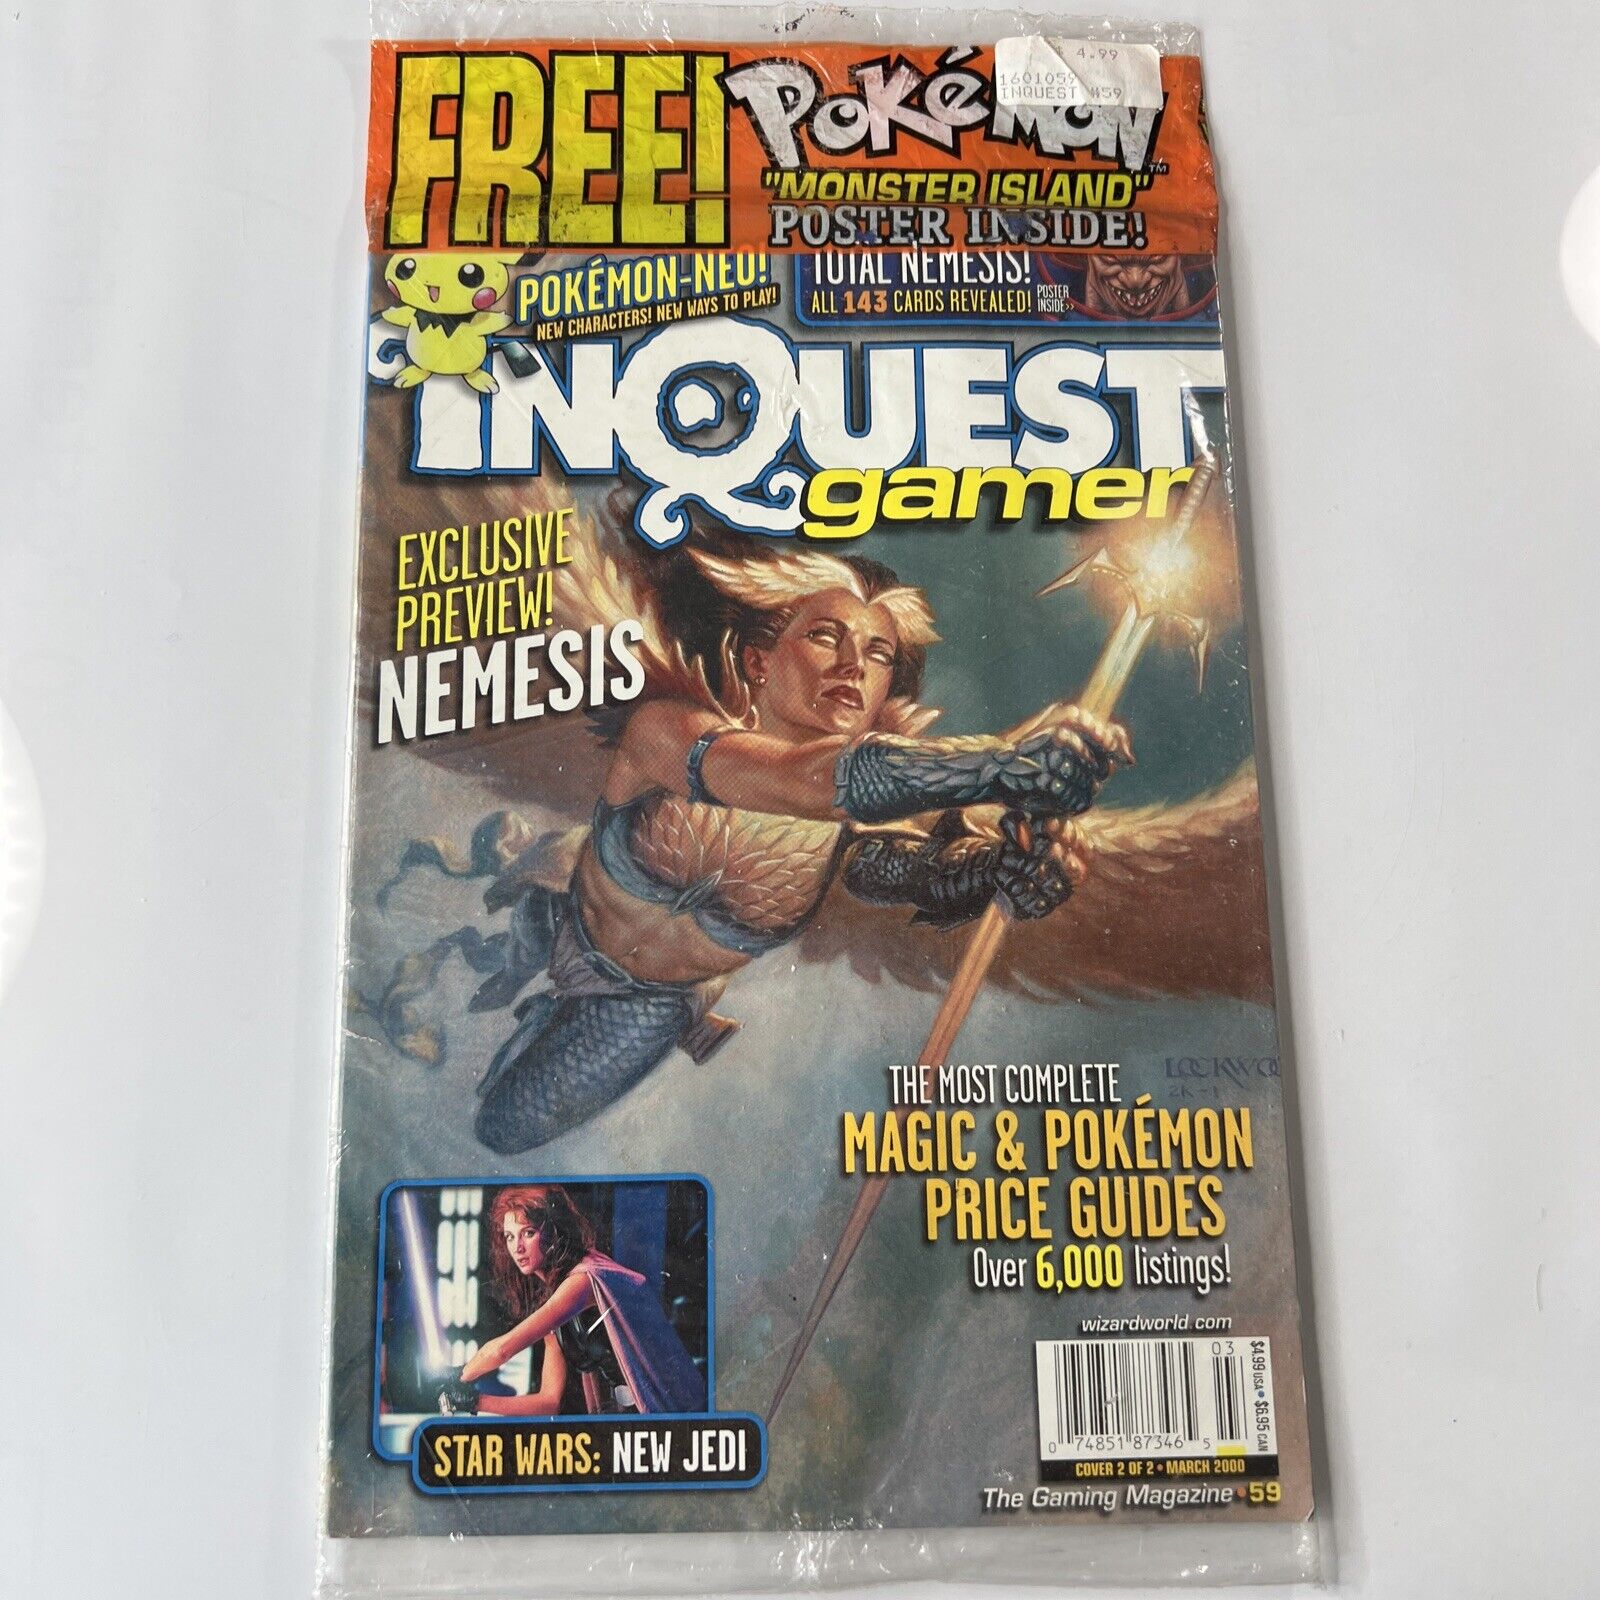 Inquest Gamer #59 The Gamer Magazine 2000 POKEMON Poster Sealed